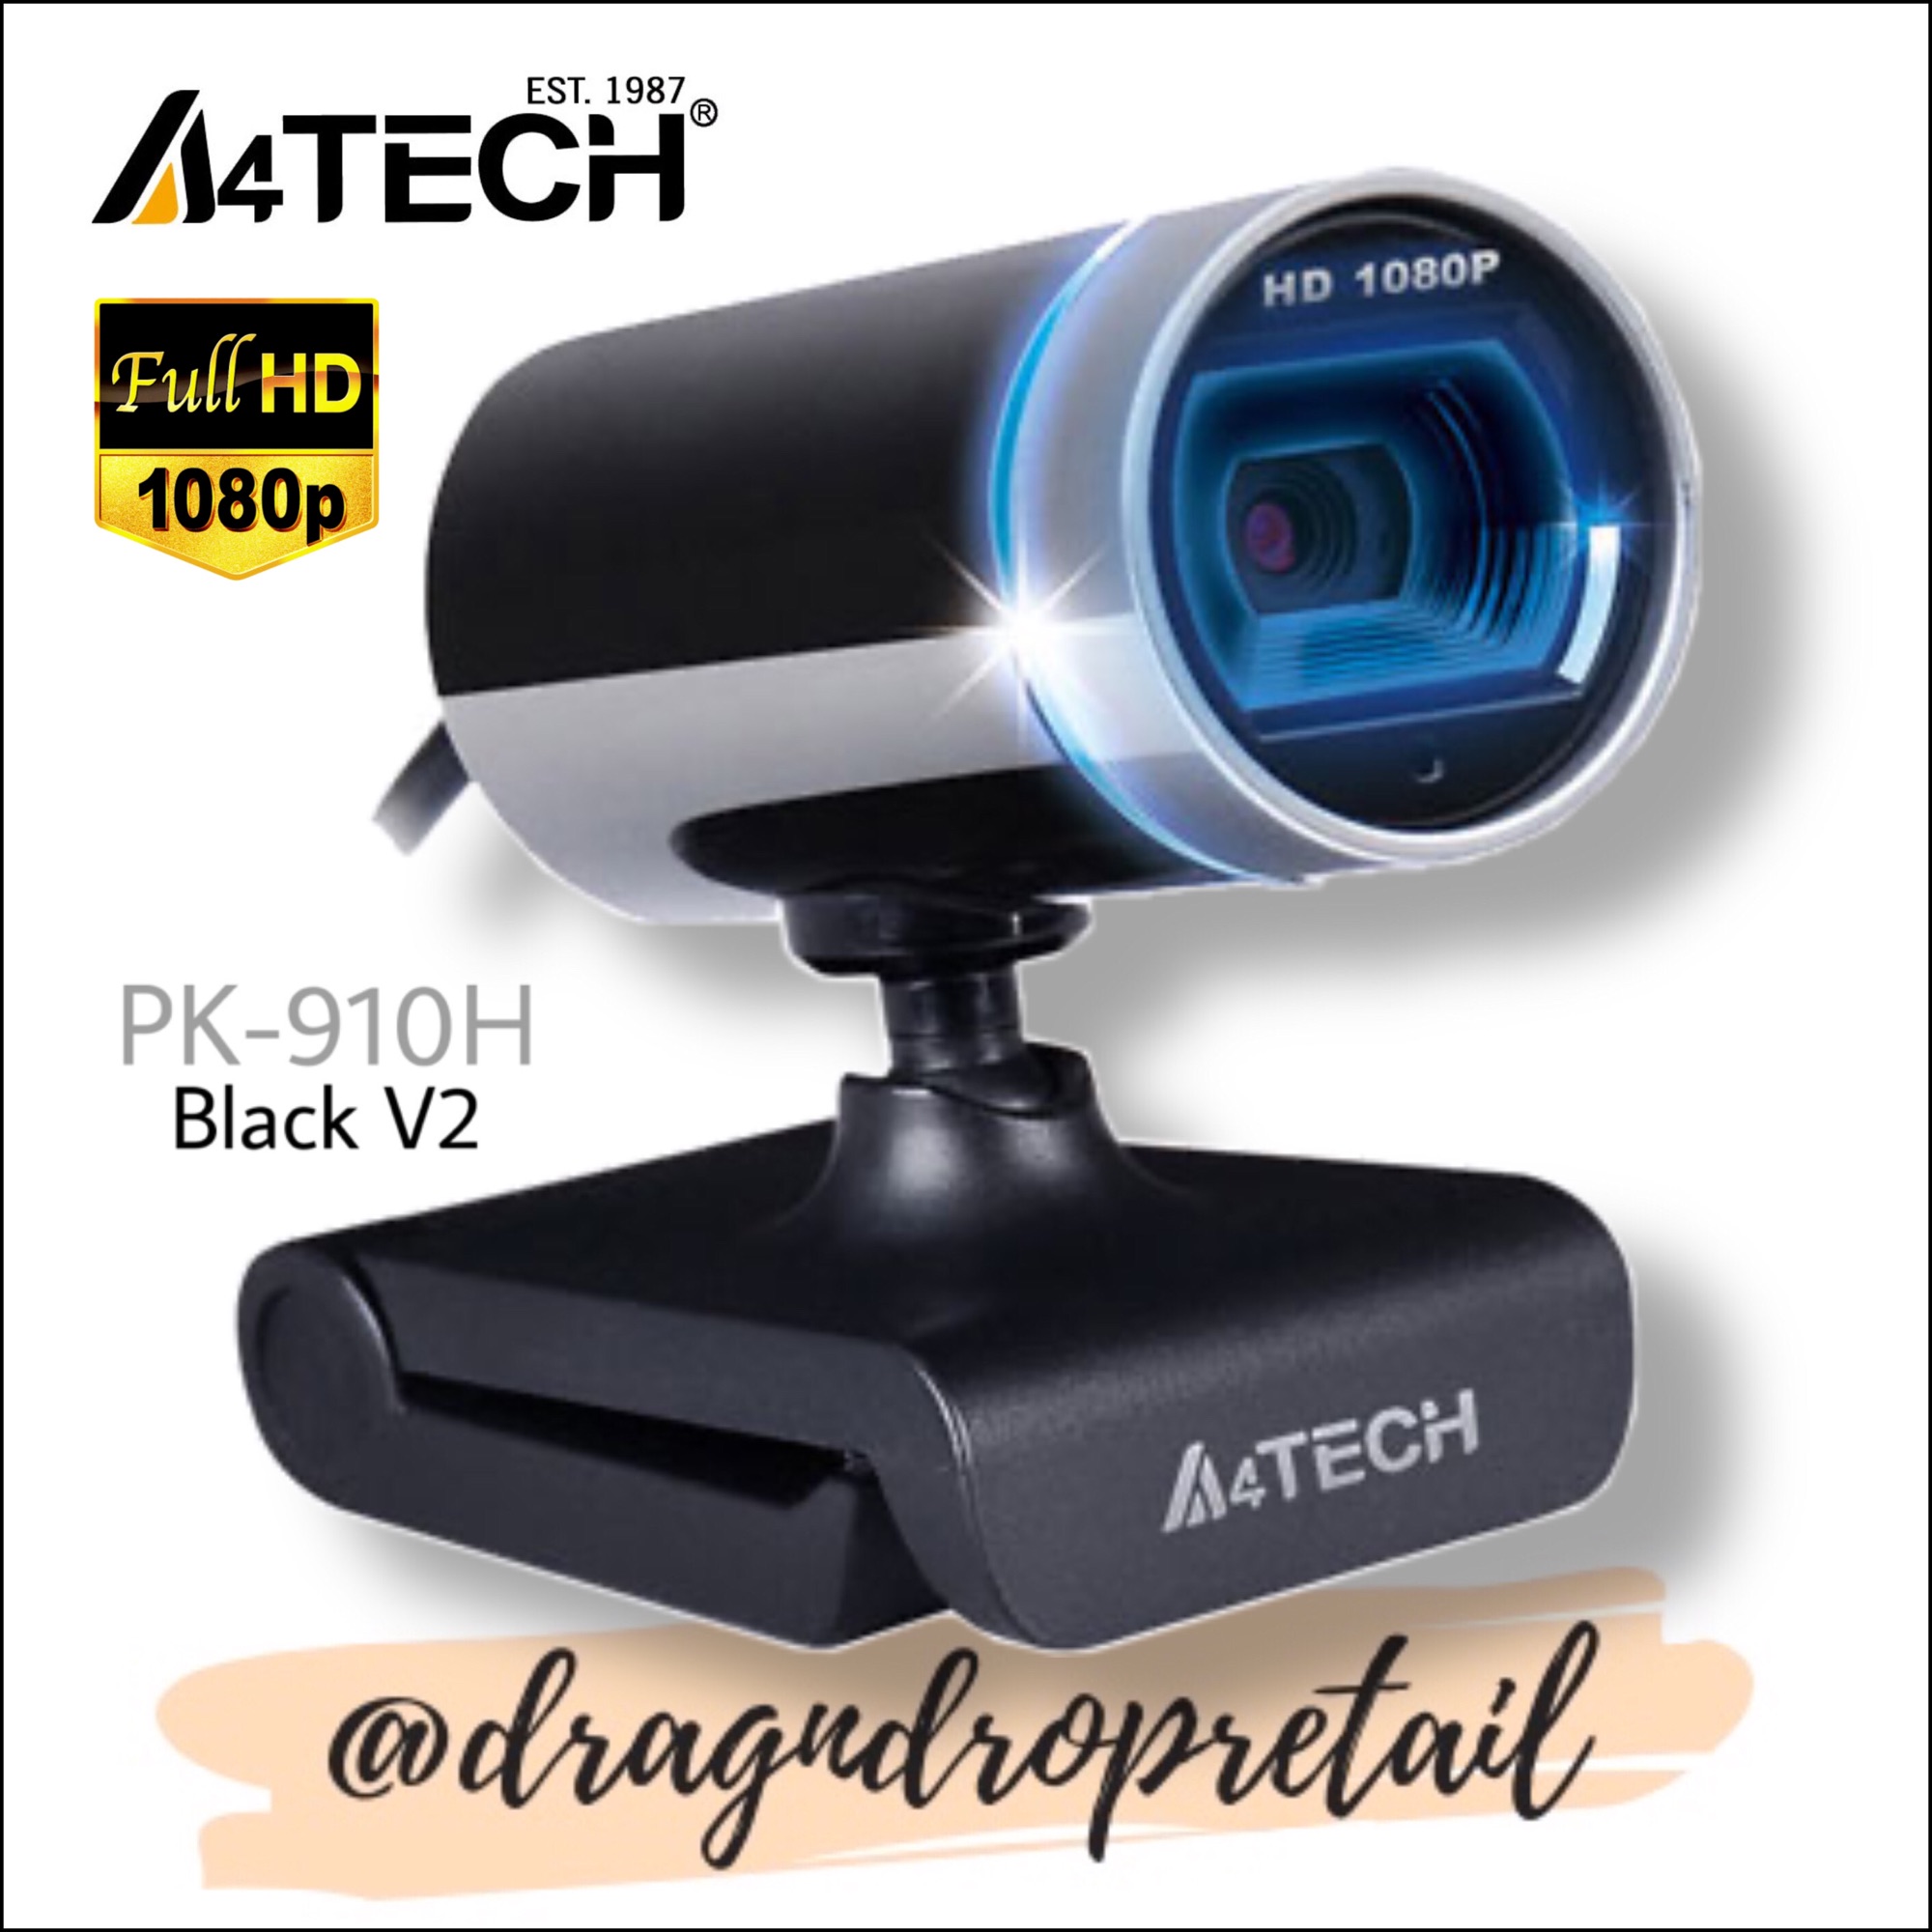 A4TECH PK-910H 1080p Full-HD WebCam Black V2